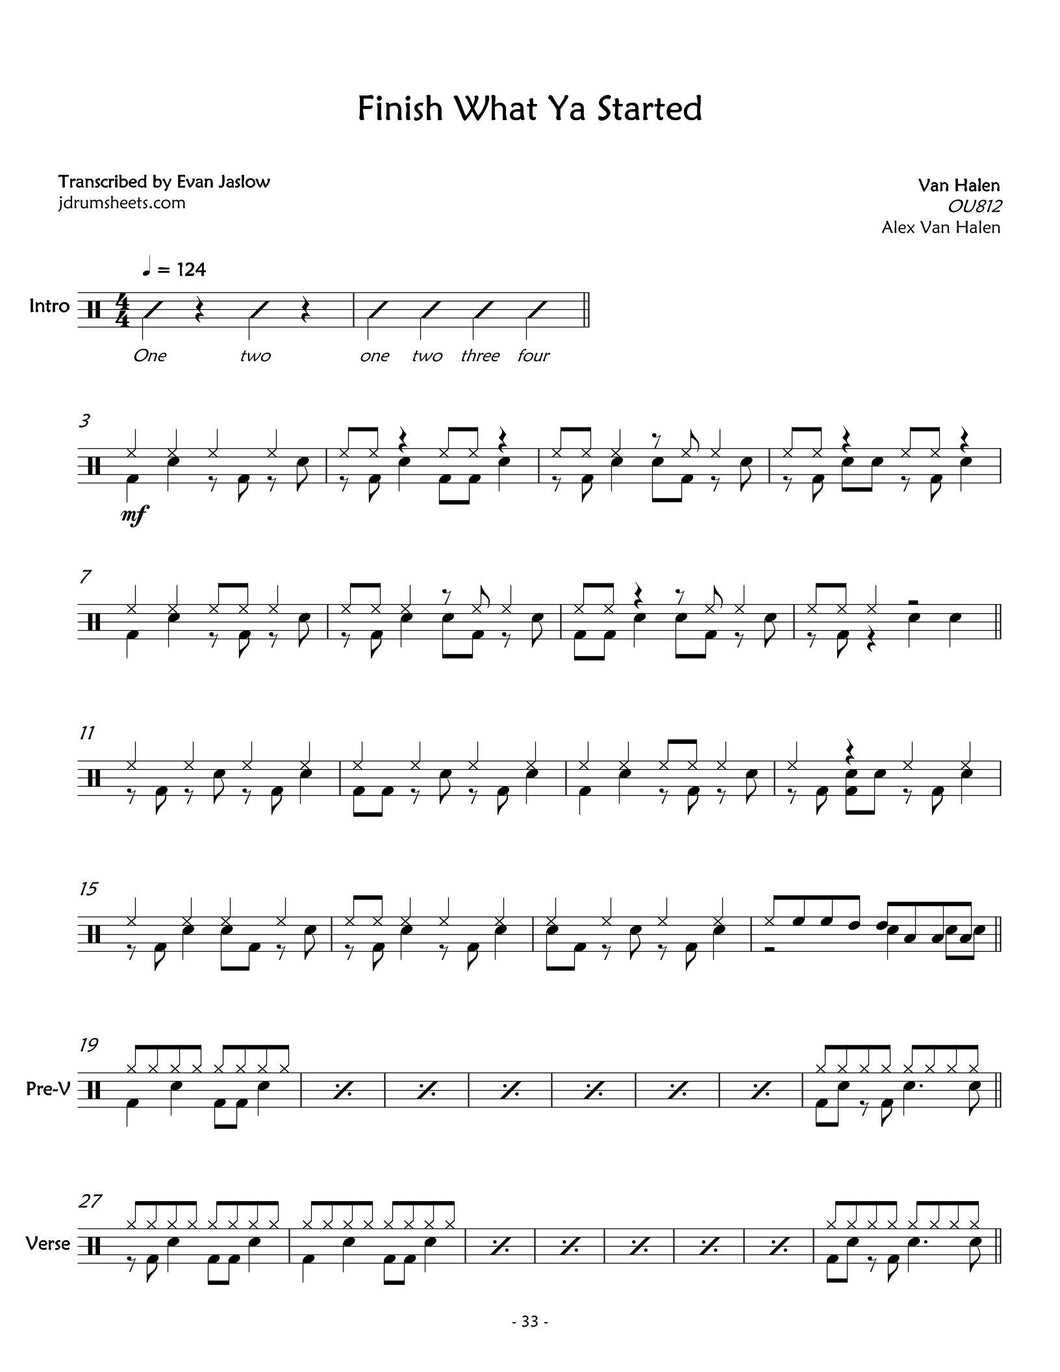 Finish What Ya Started - Van Halen - Full Drum Transcription / Drum Sheet Music - Jaslow Drum Sheets